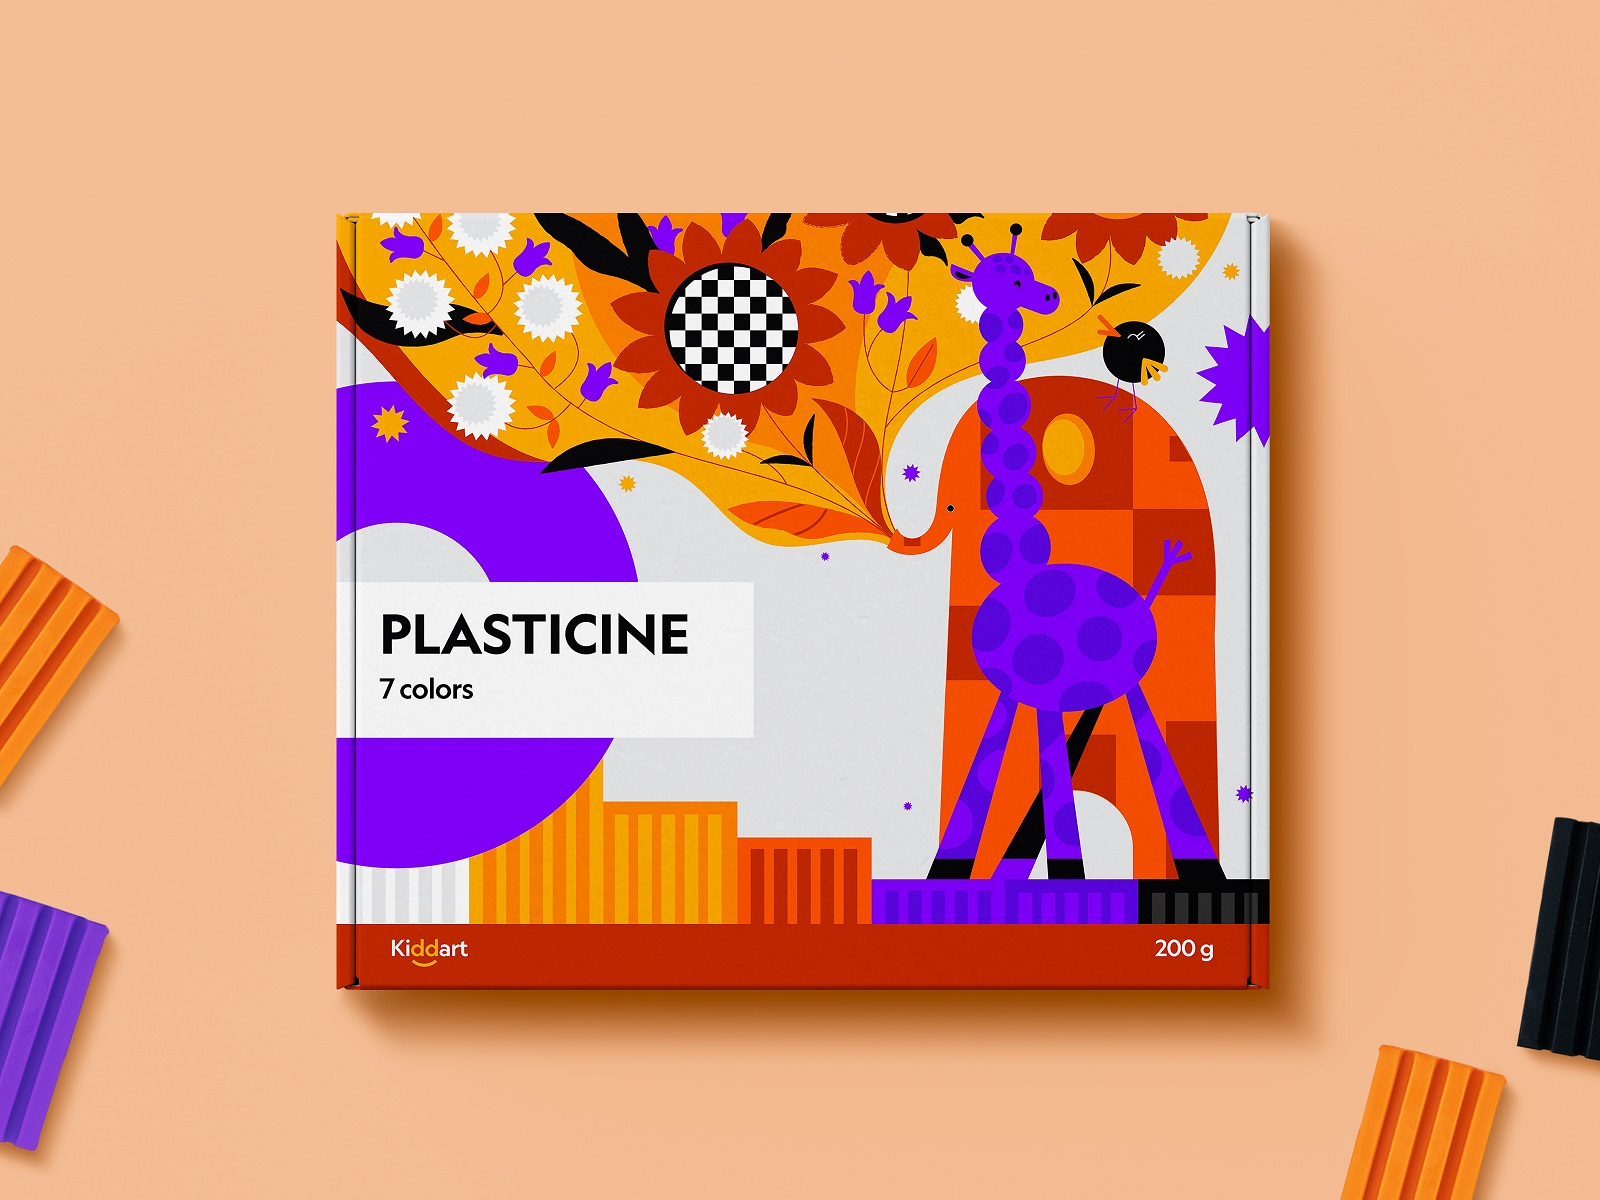 Plasticine packaging design tubikarts